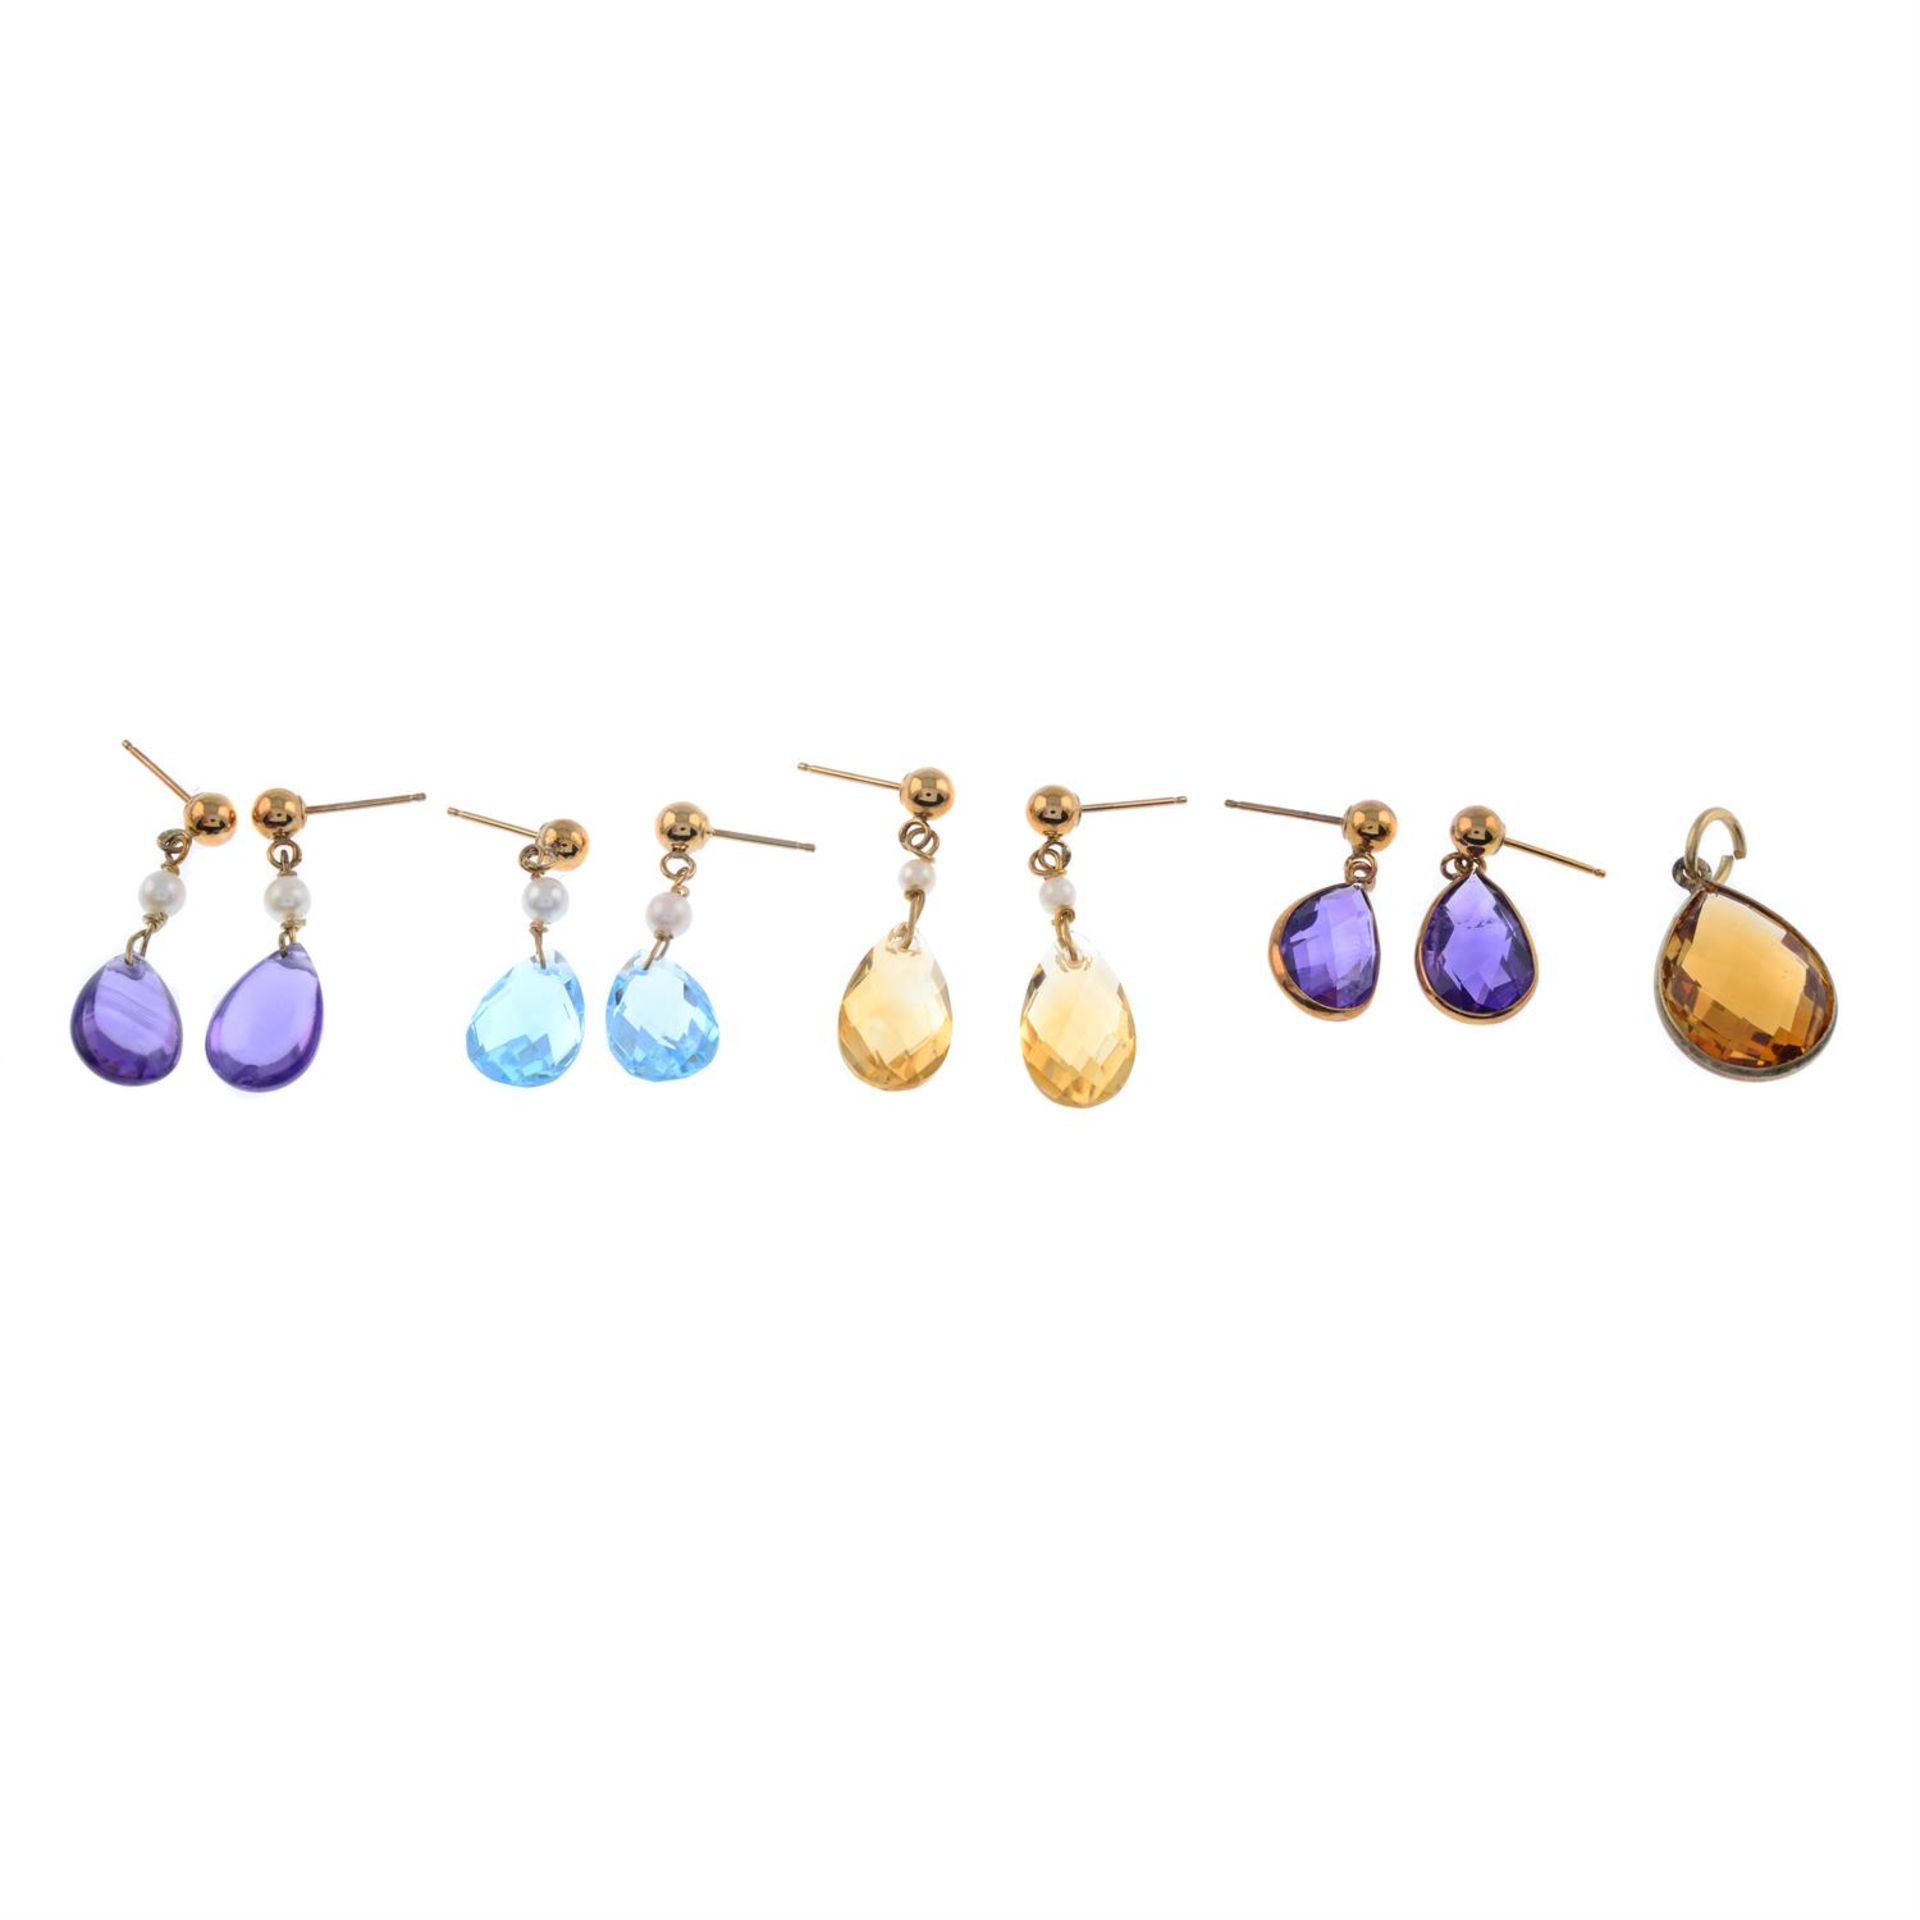 Gem-set pendant & earrings - Image 2 of 2